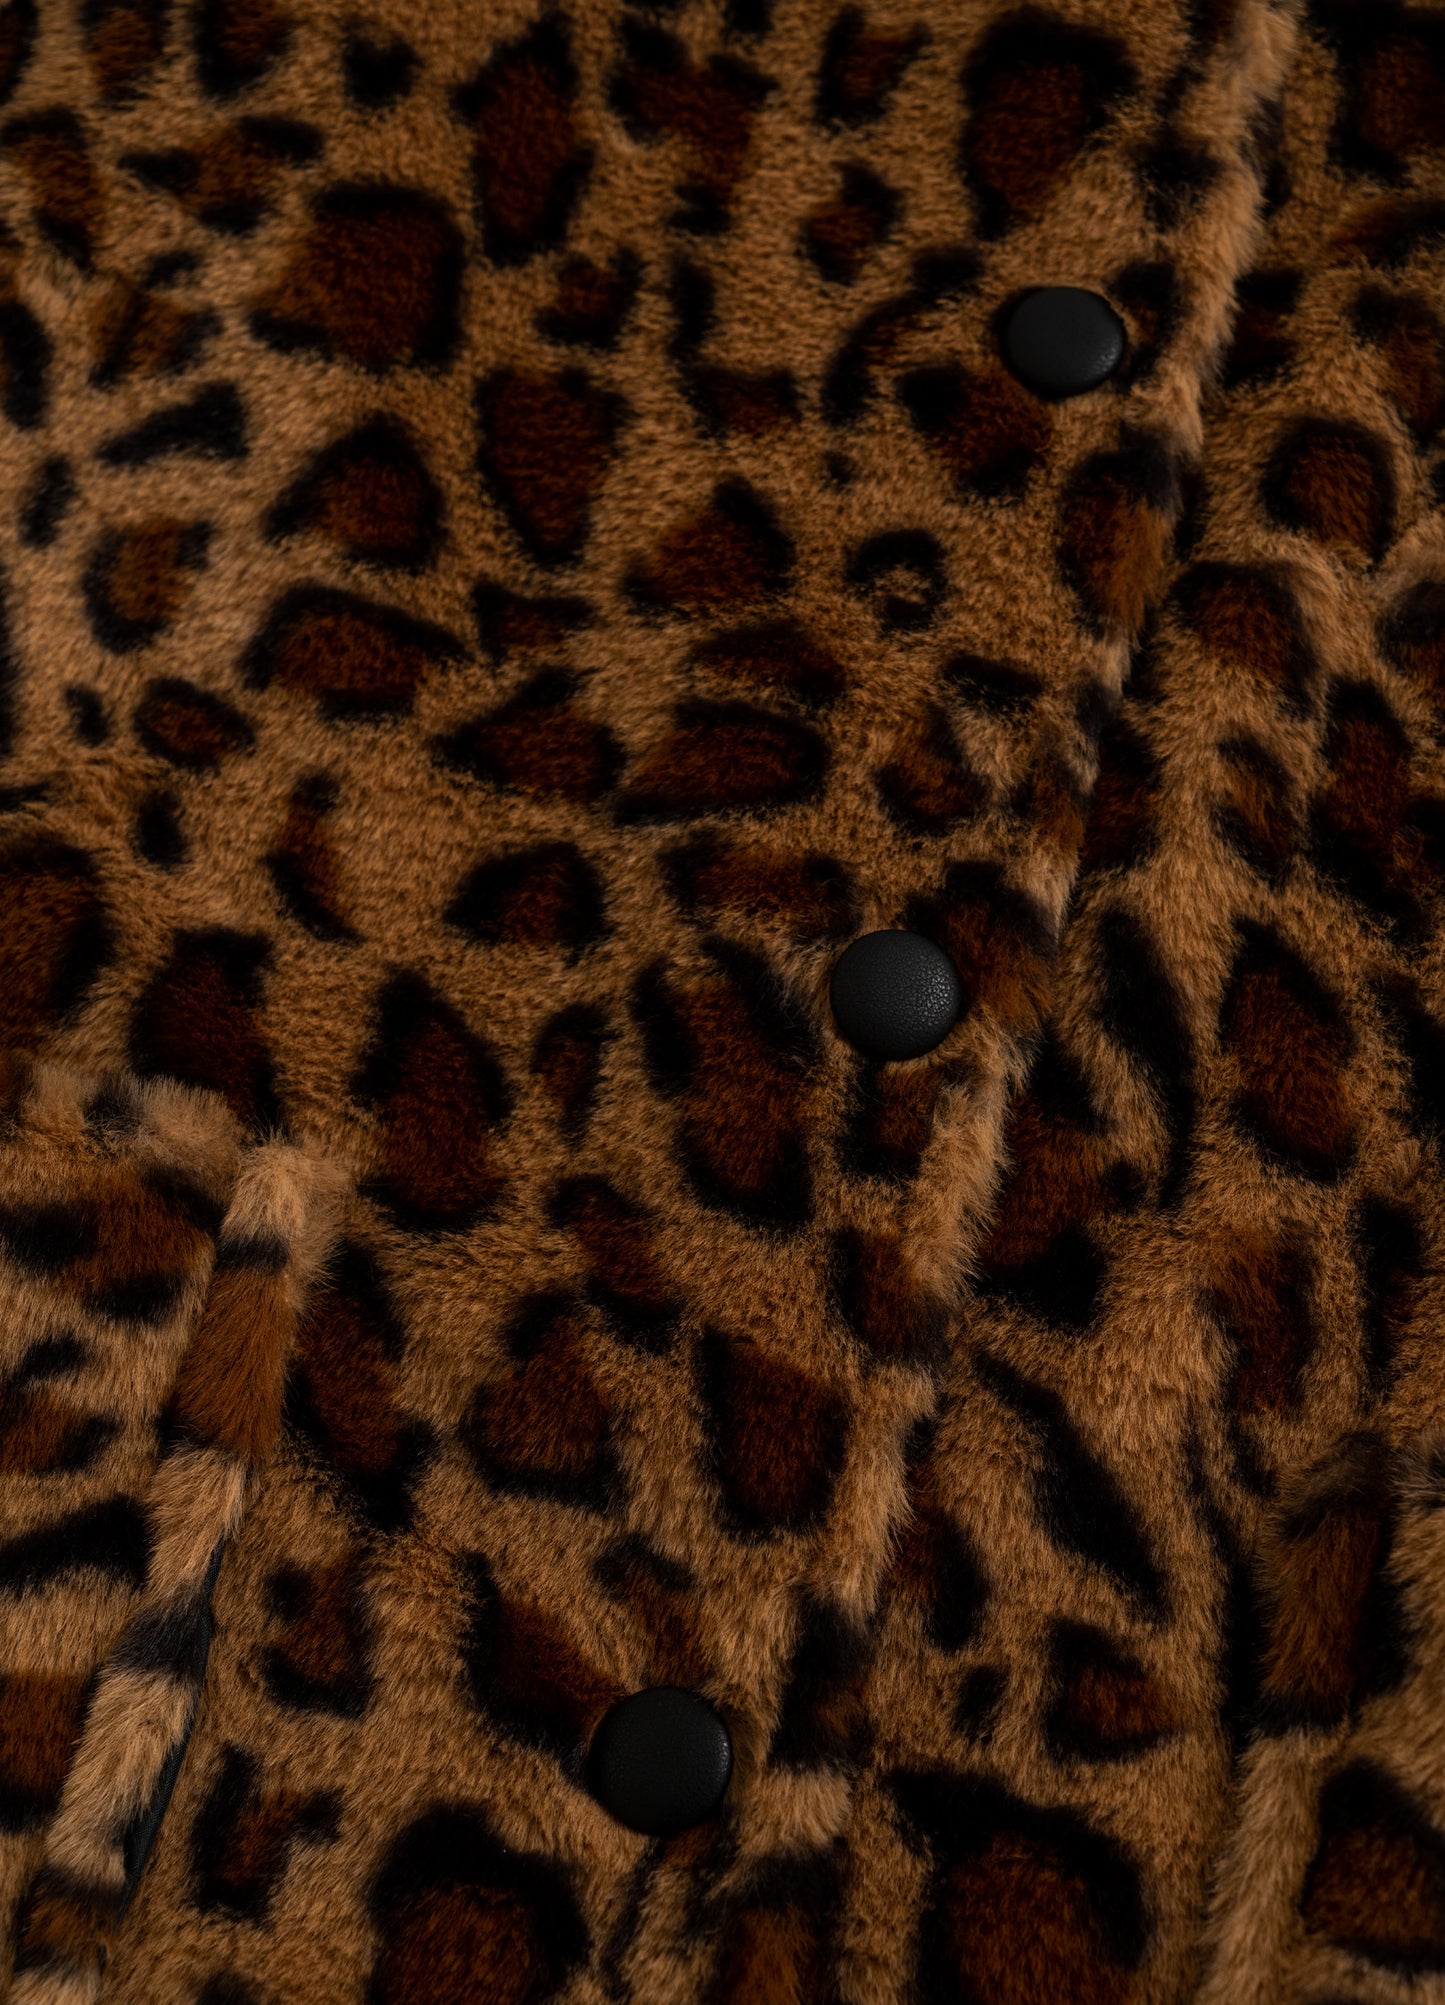 Reversible Leopard Jacket